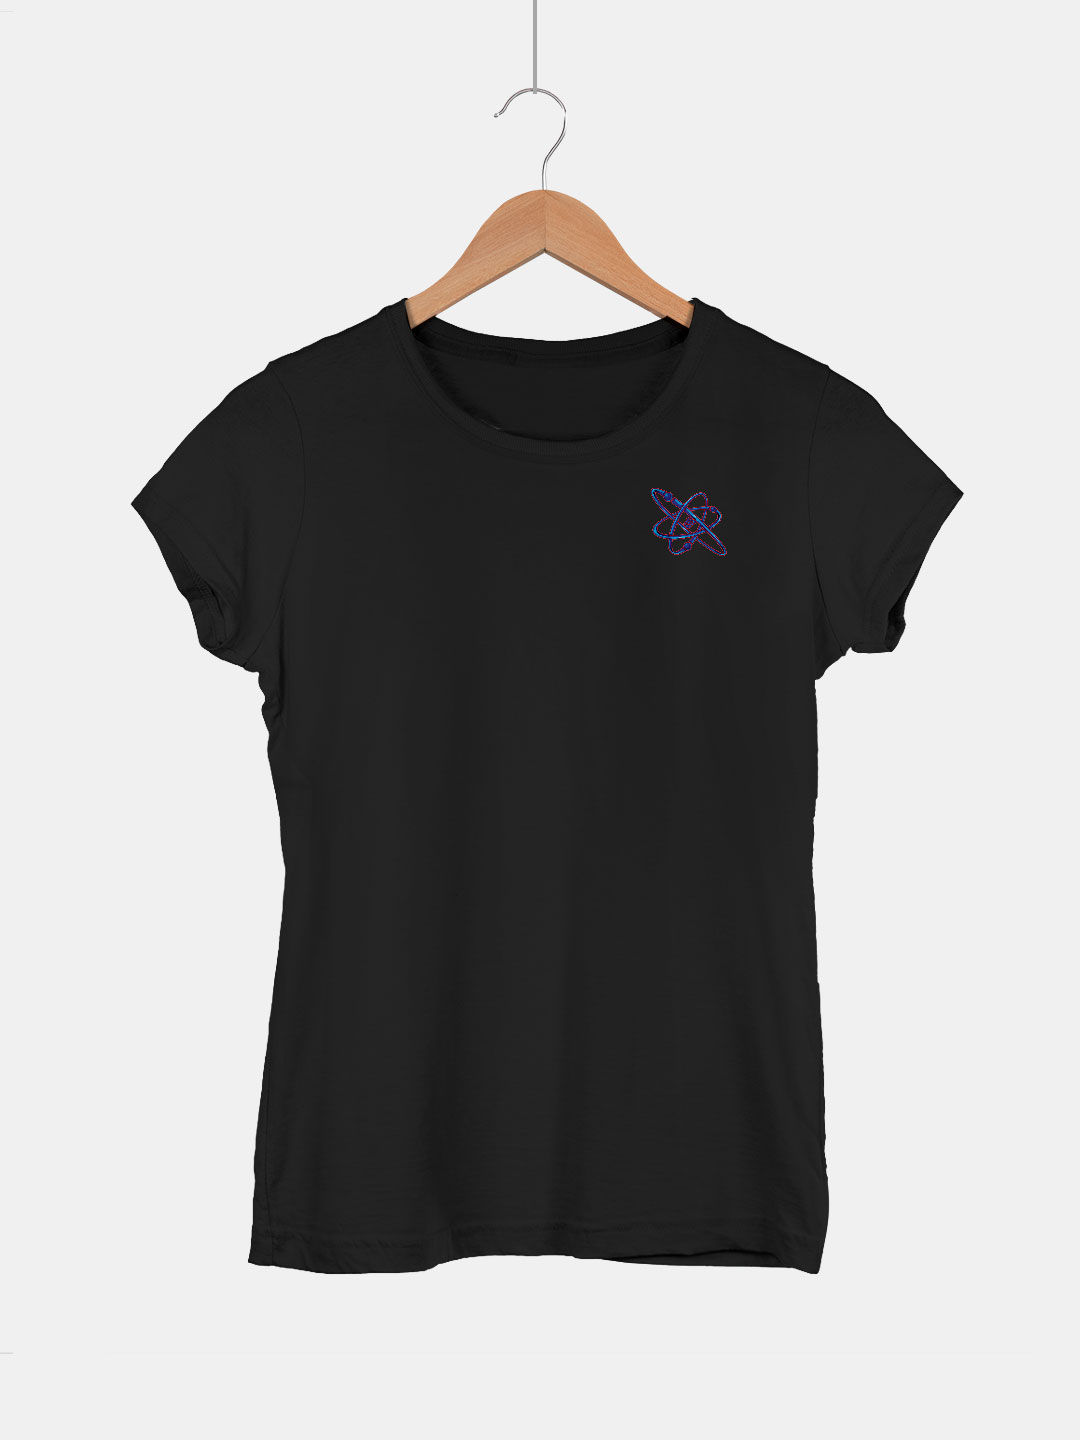 Atom Smasher Black - Womens Designer T-Shirts